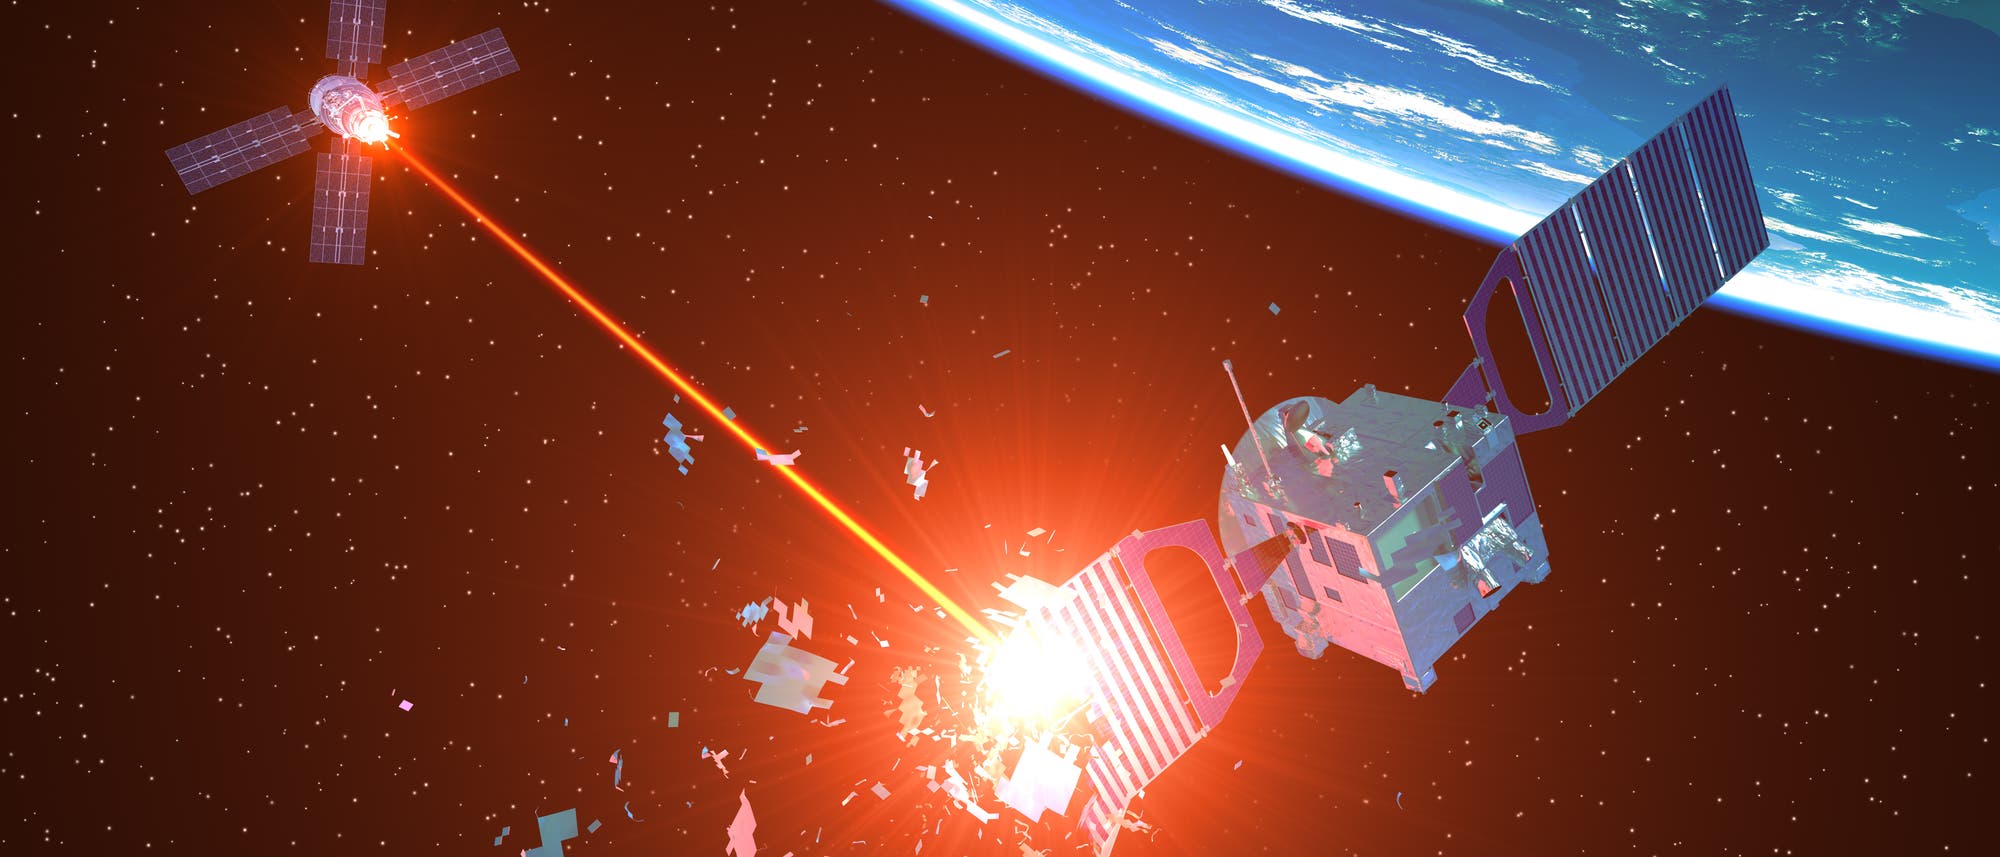 Raumflugkörper attackiert Satelliten mittels Laserstrahl.